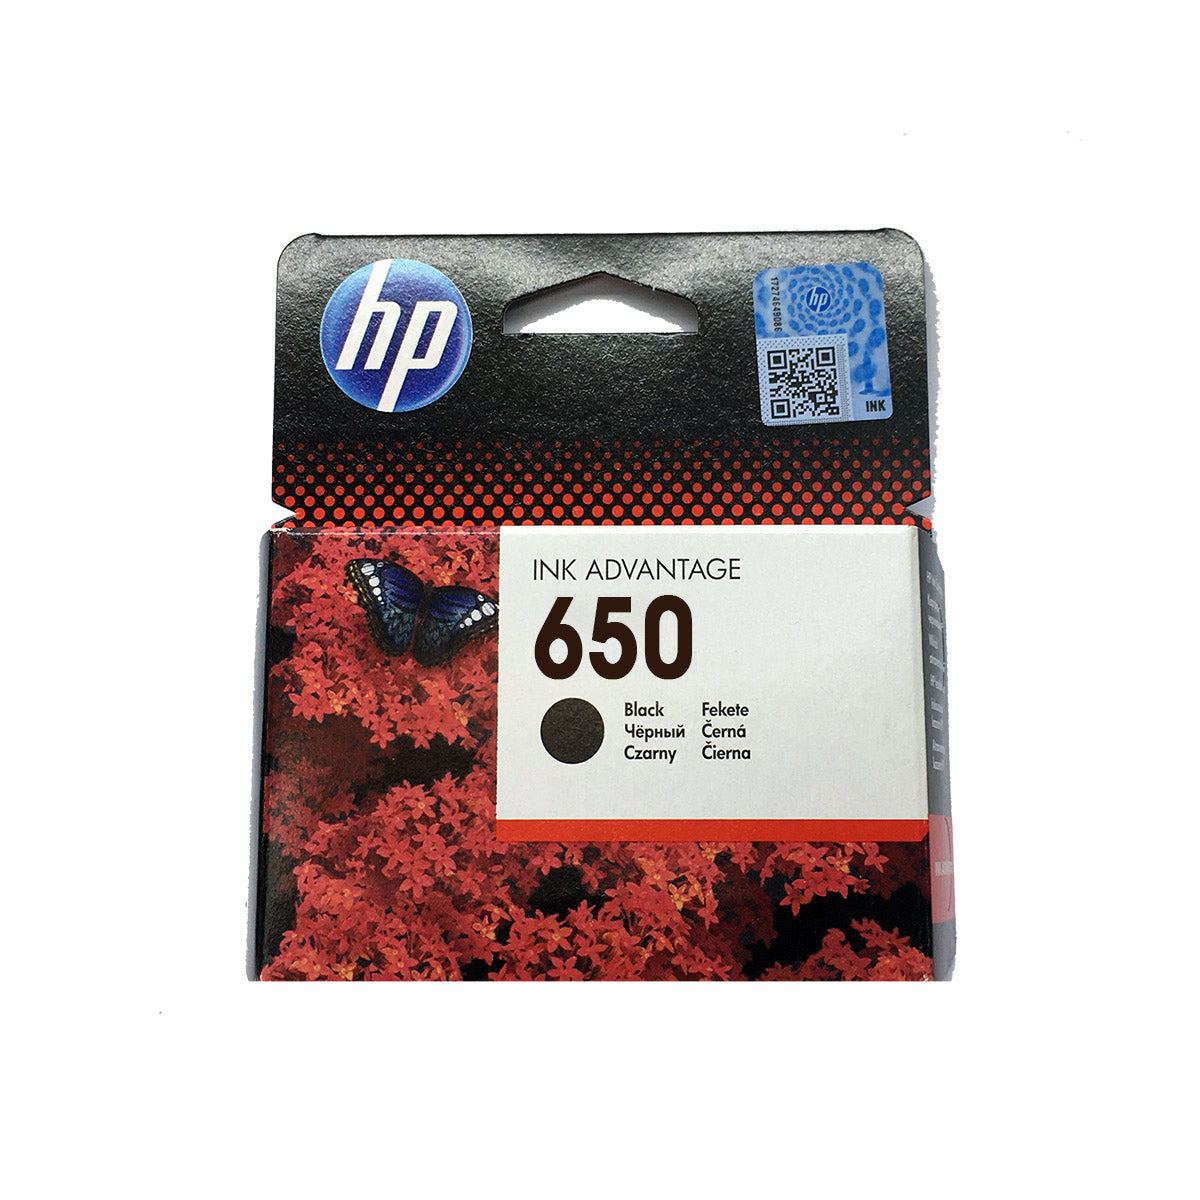 Shop HP 650 Black Ink Advantage Cartridge online in Abu Dhabi, UAE